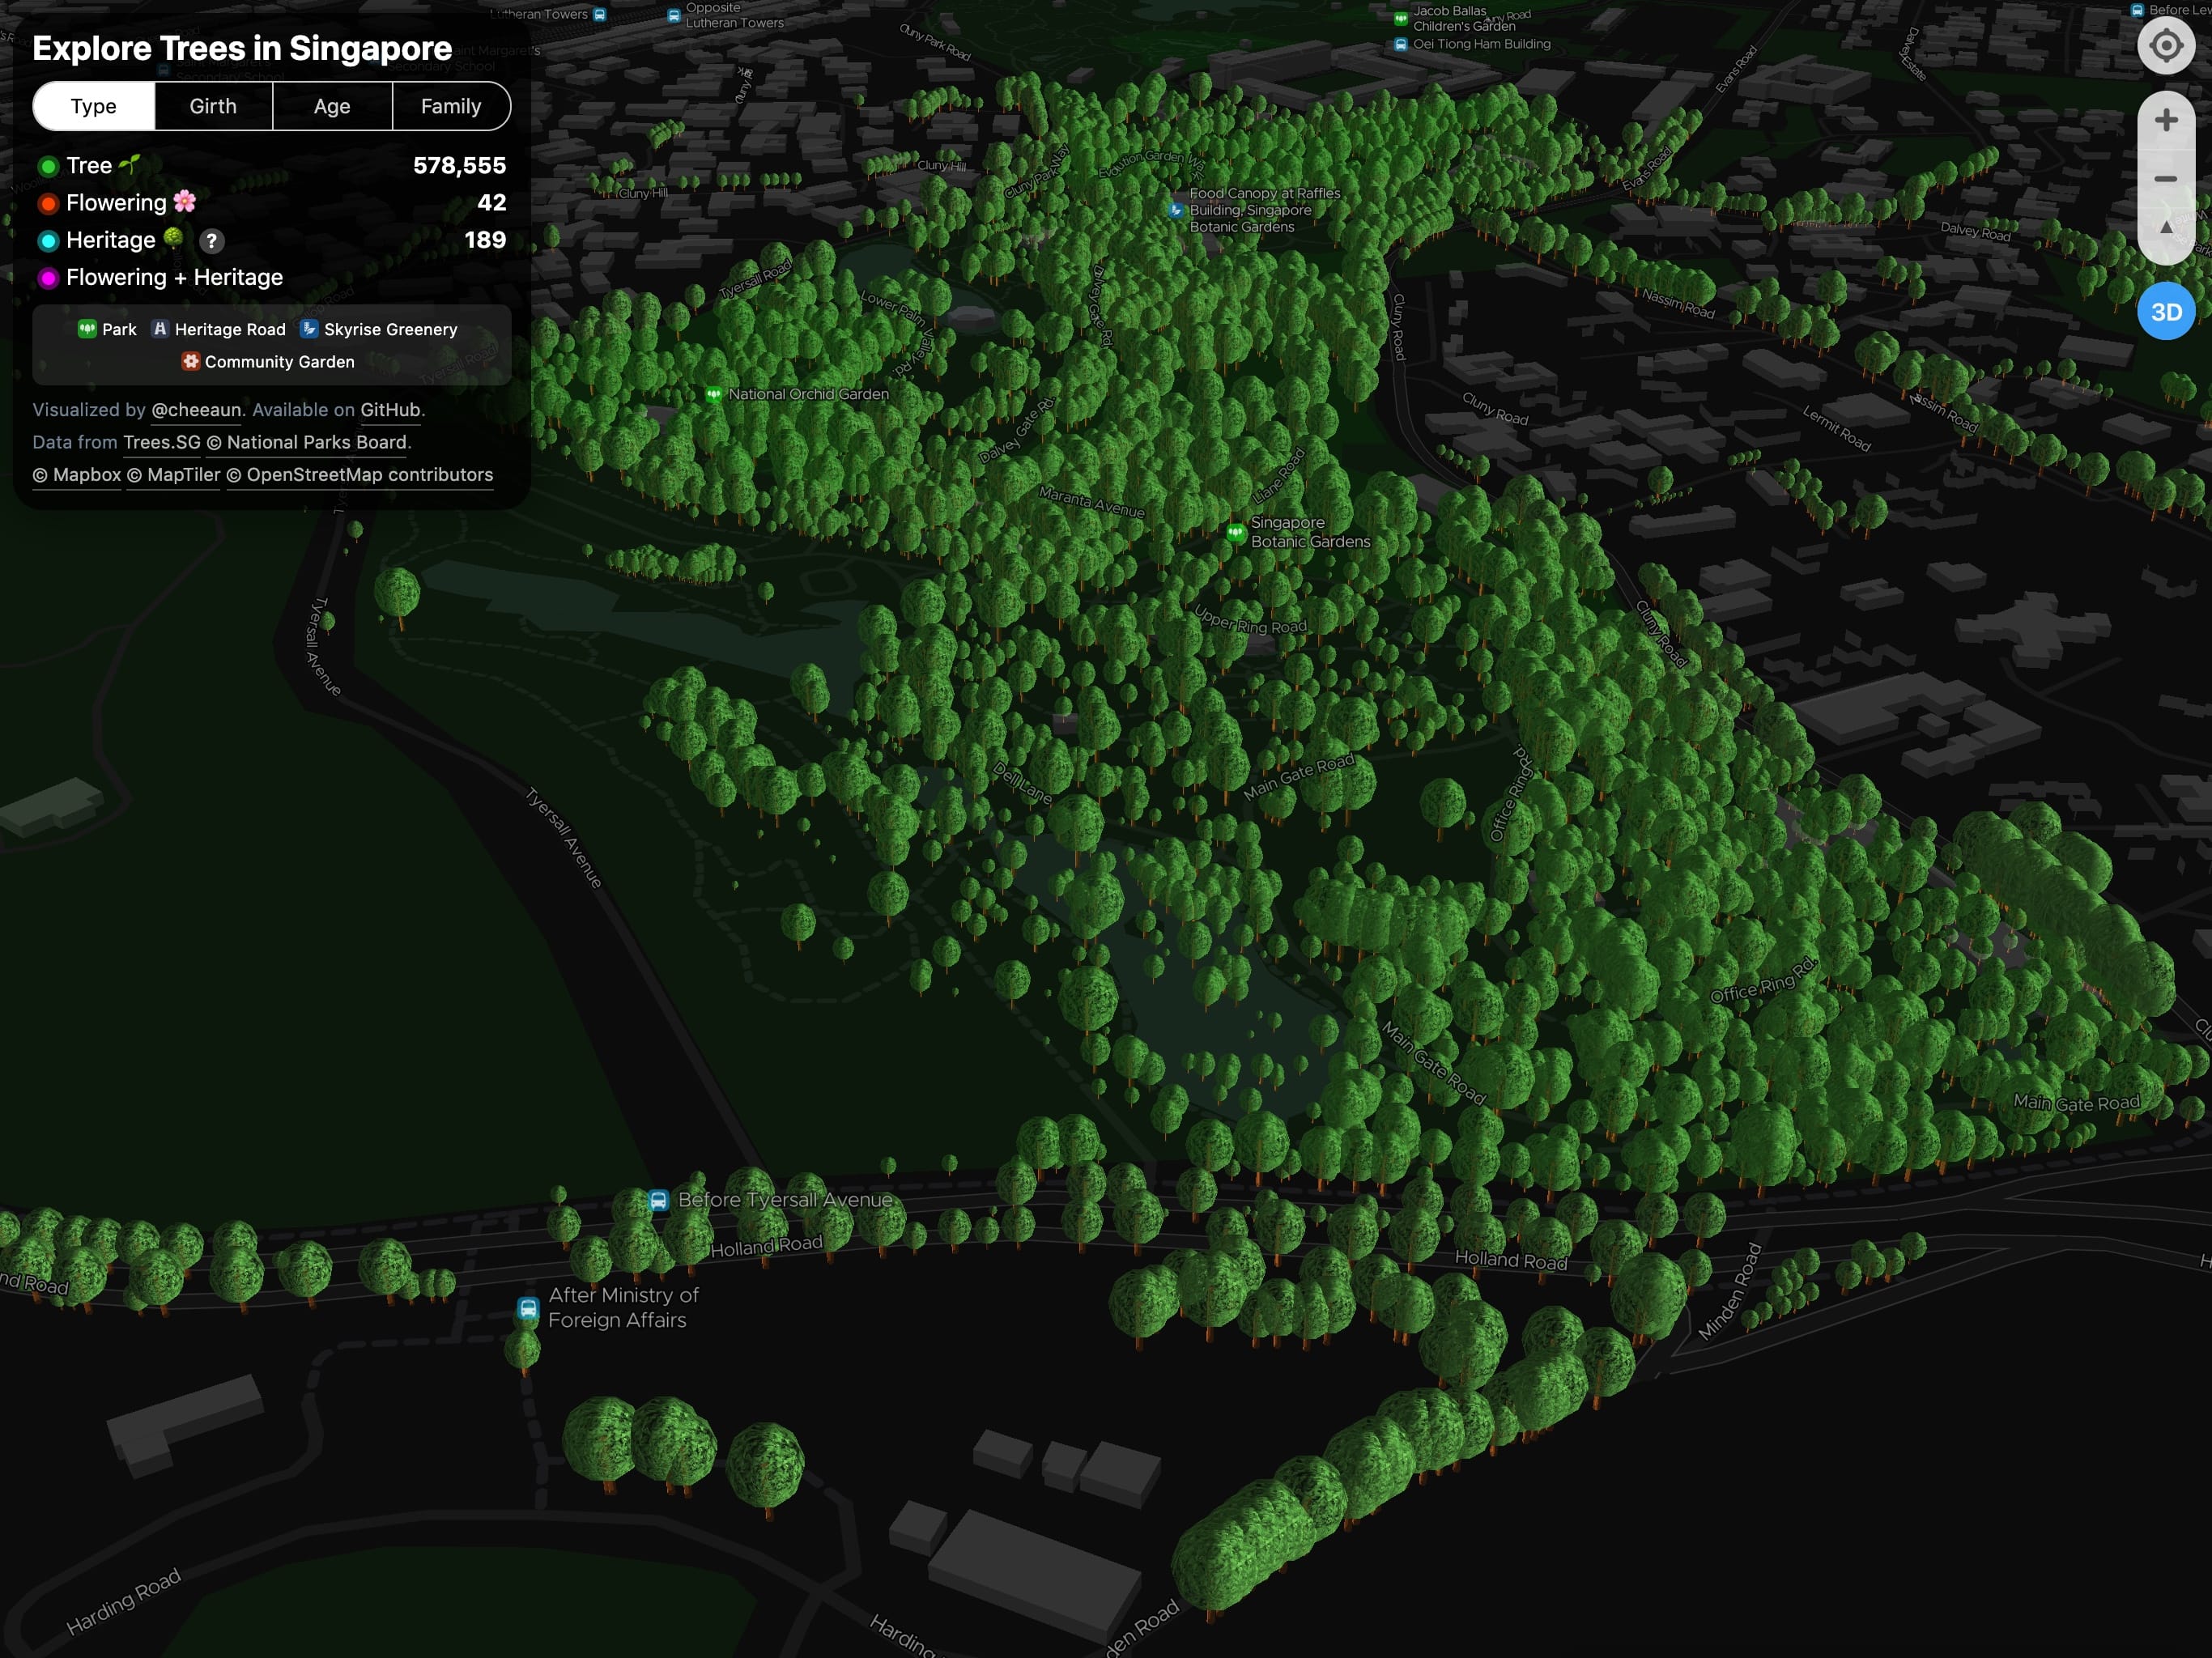 exploretrees-sg-3d-trees-overview@2x